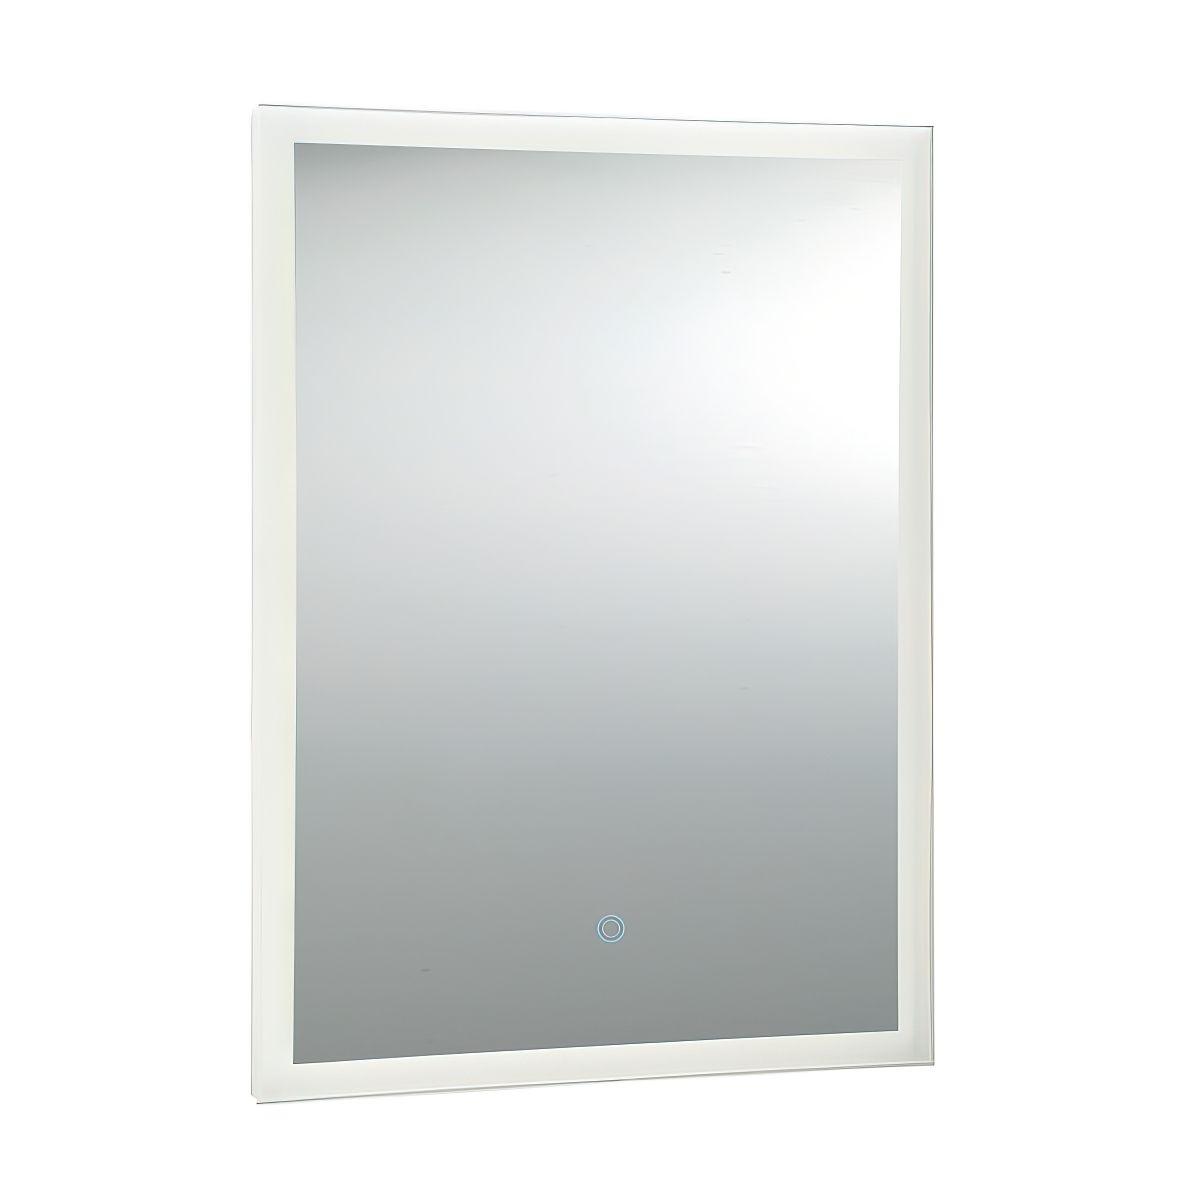 Benji 24 In x 32 In. White LED Wall Mirror